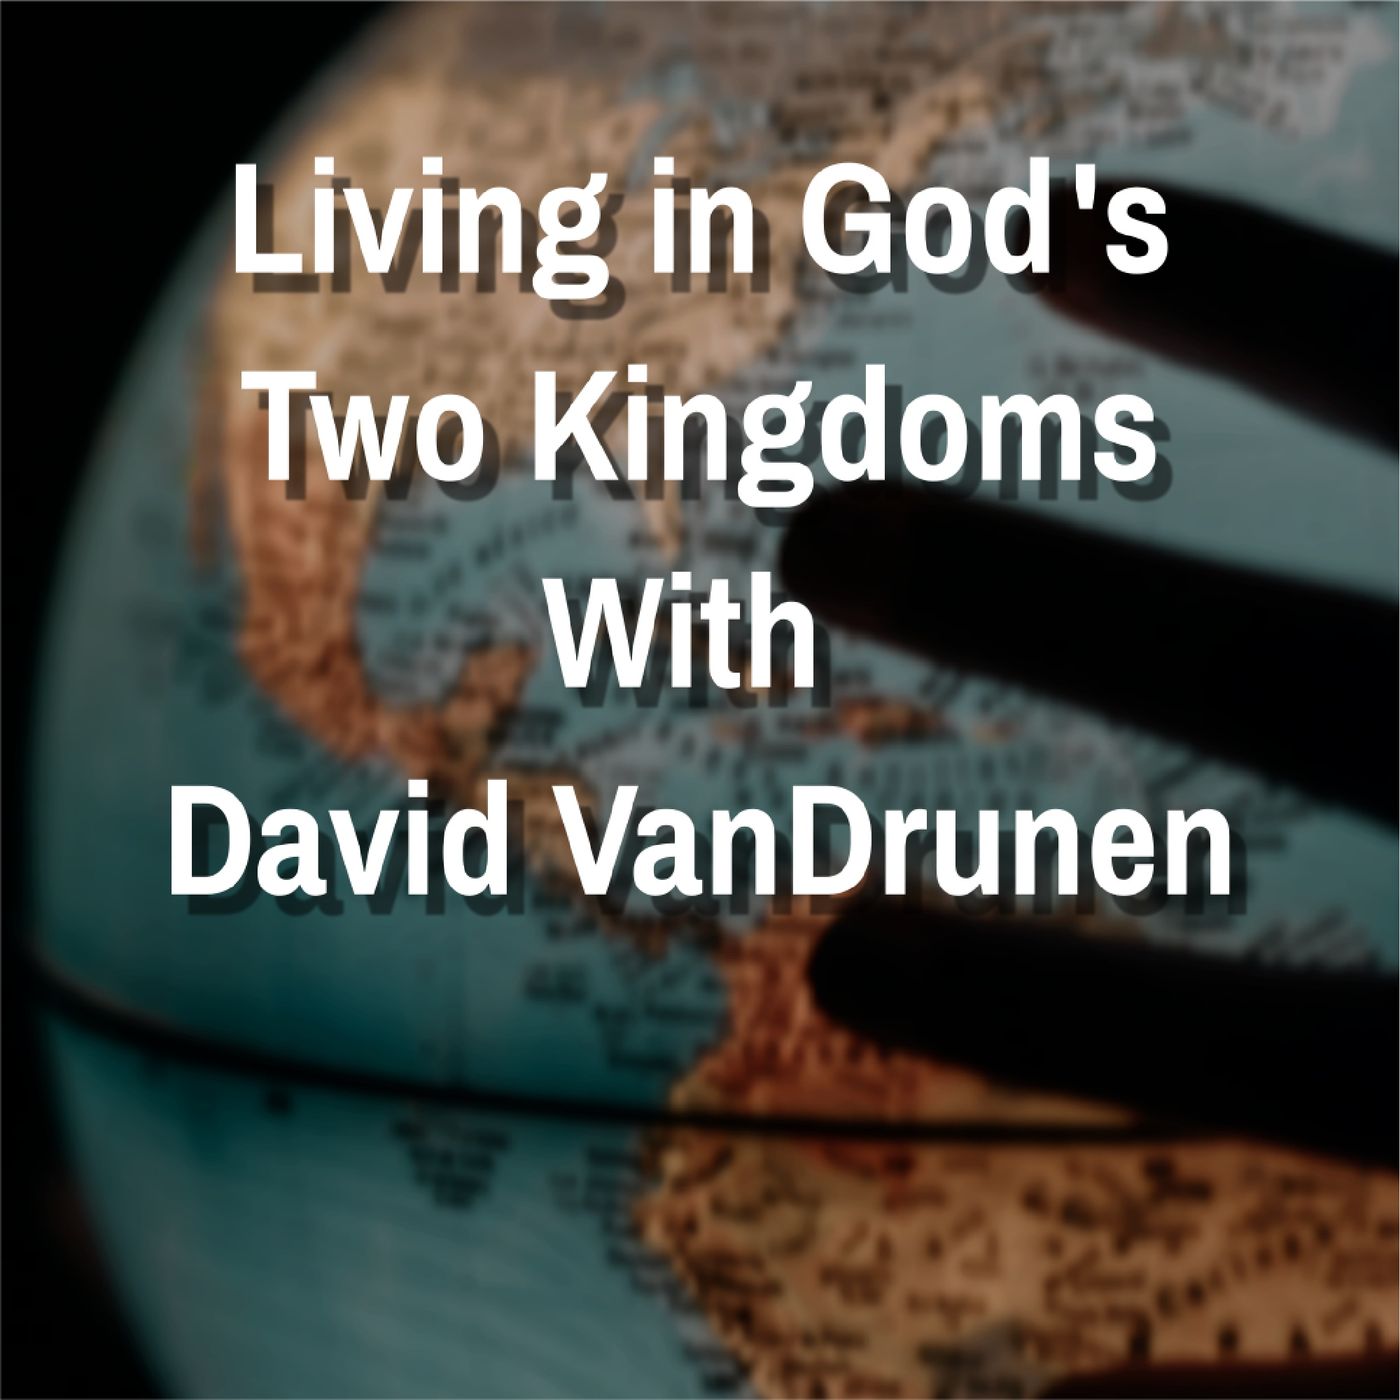 Living in God's Two Kingdoms with David VanDrunen